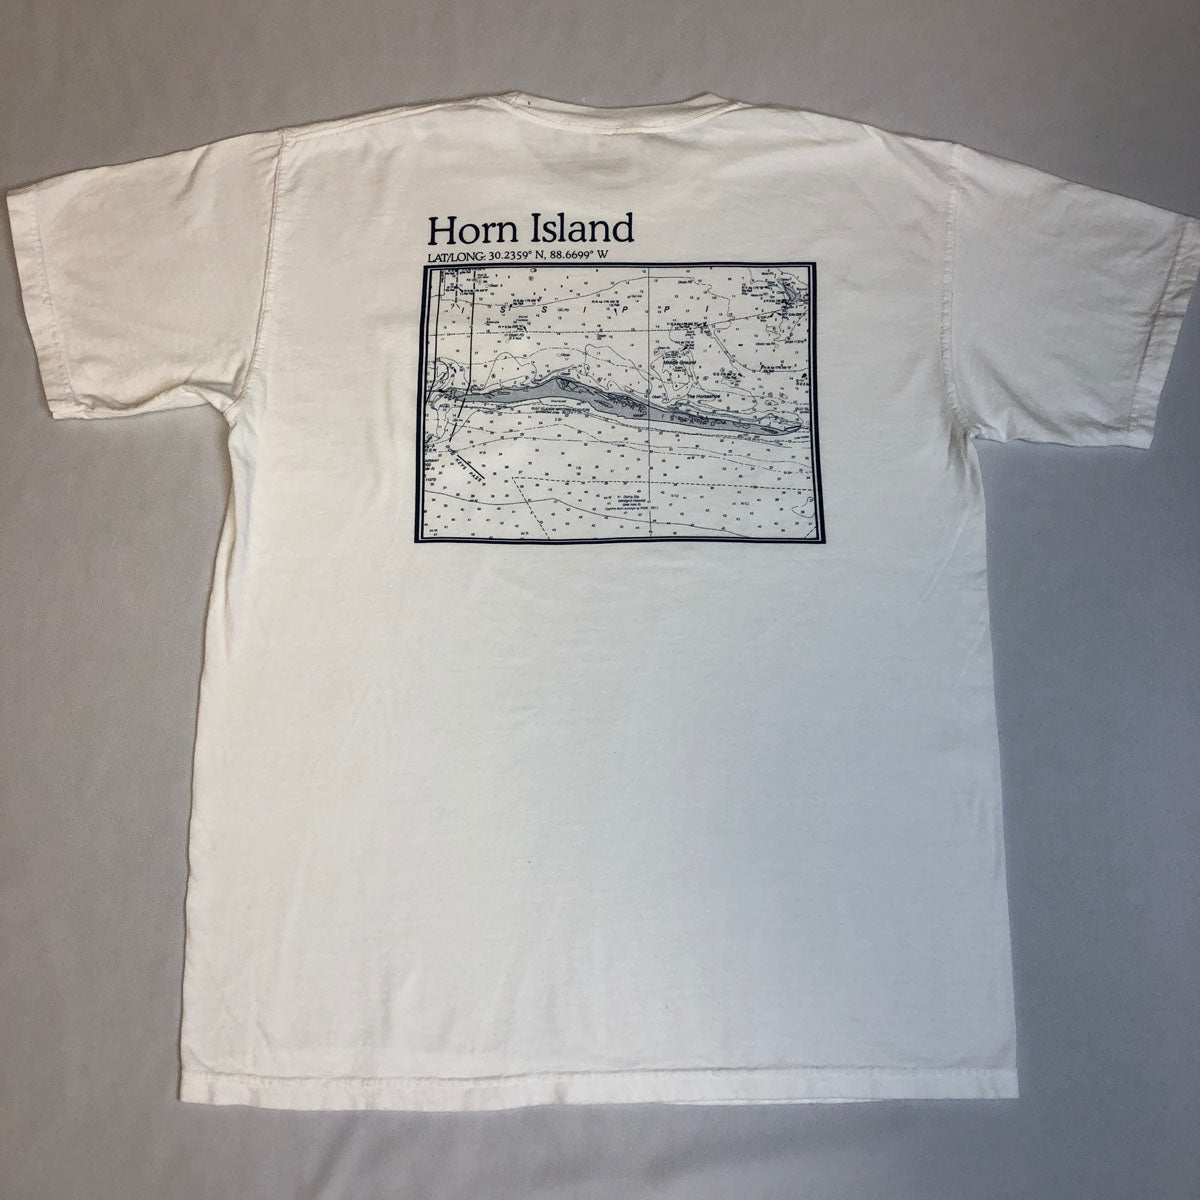 S/S Alman, Island Horn – S.F. T-Shirt Alman, S. F.